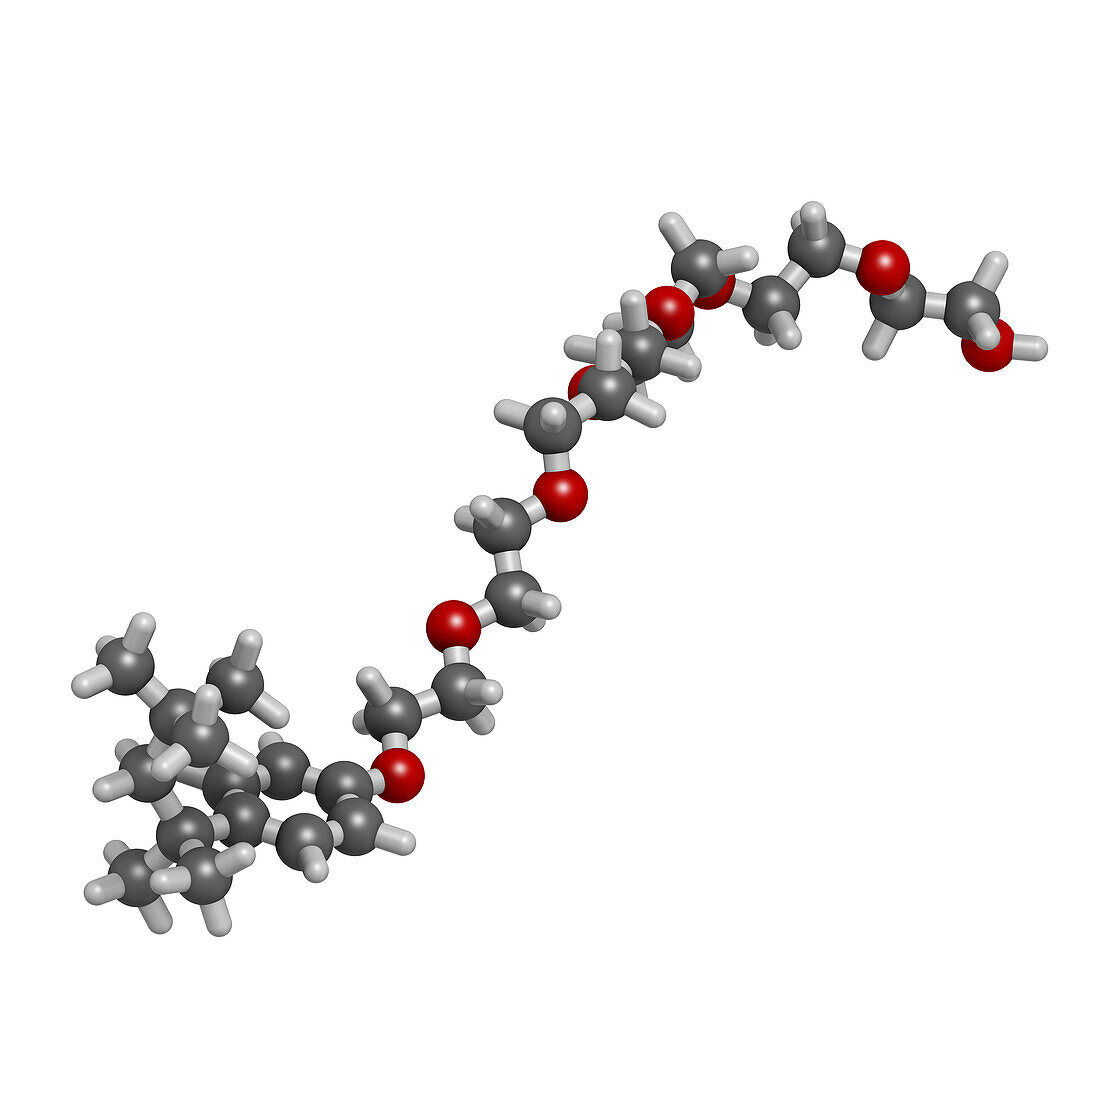 Triton x-100 detergent molecule, illustration